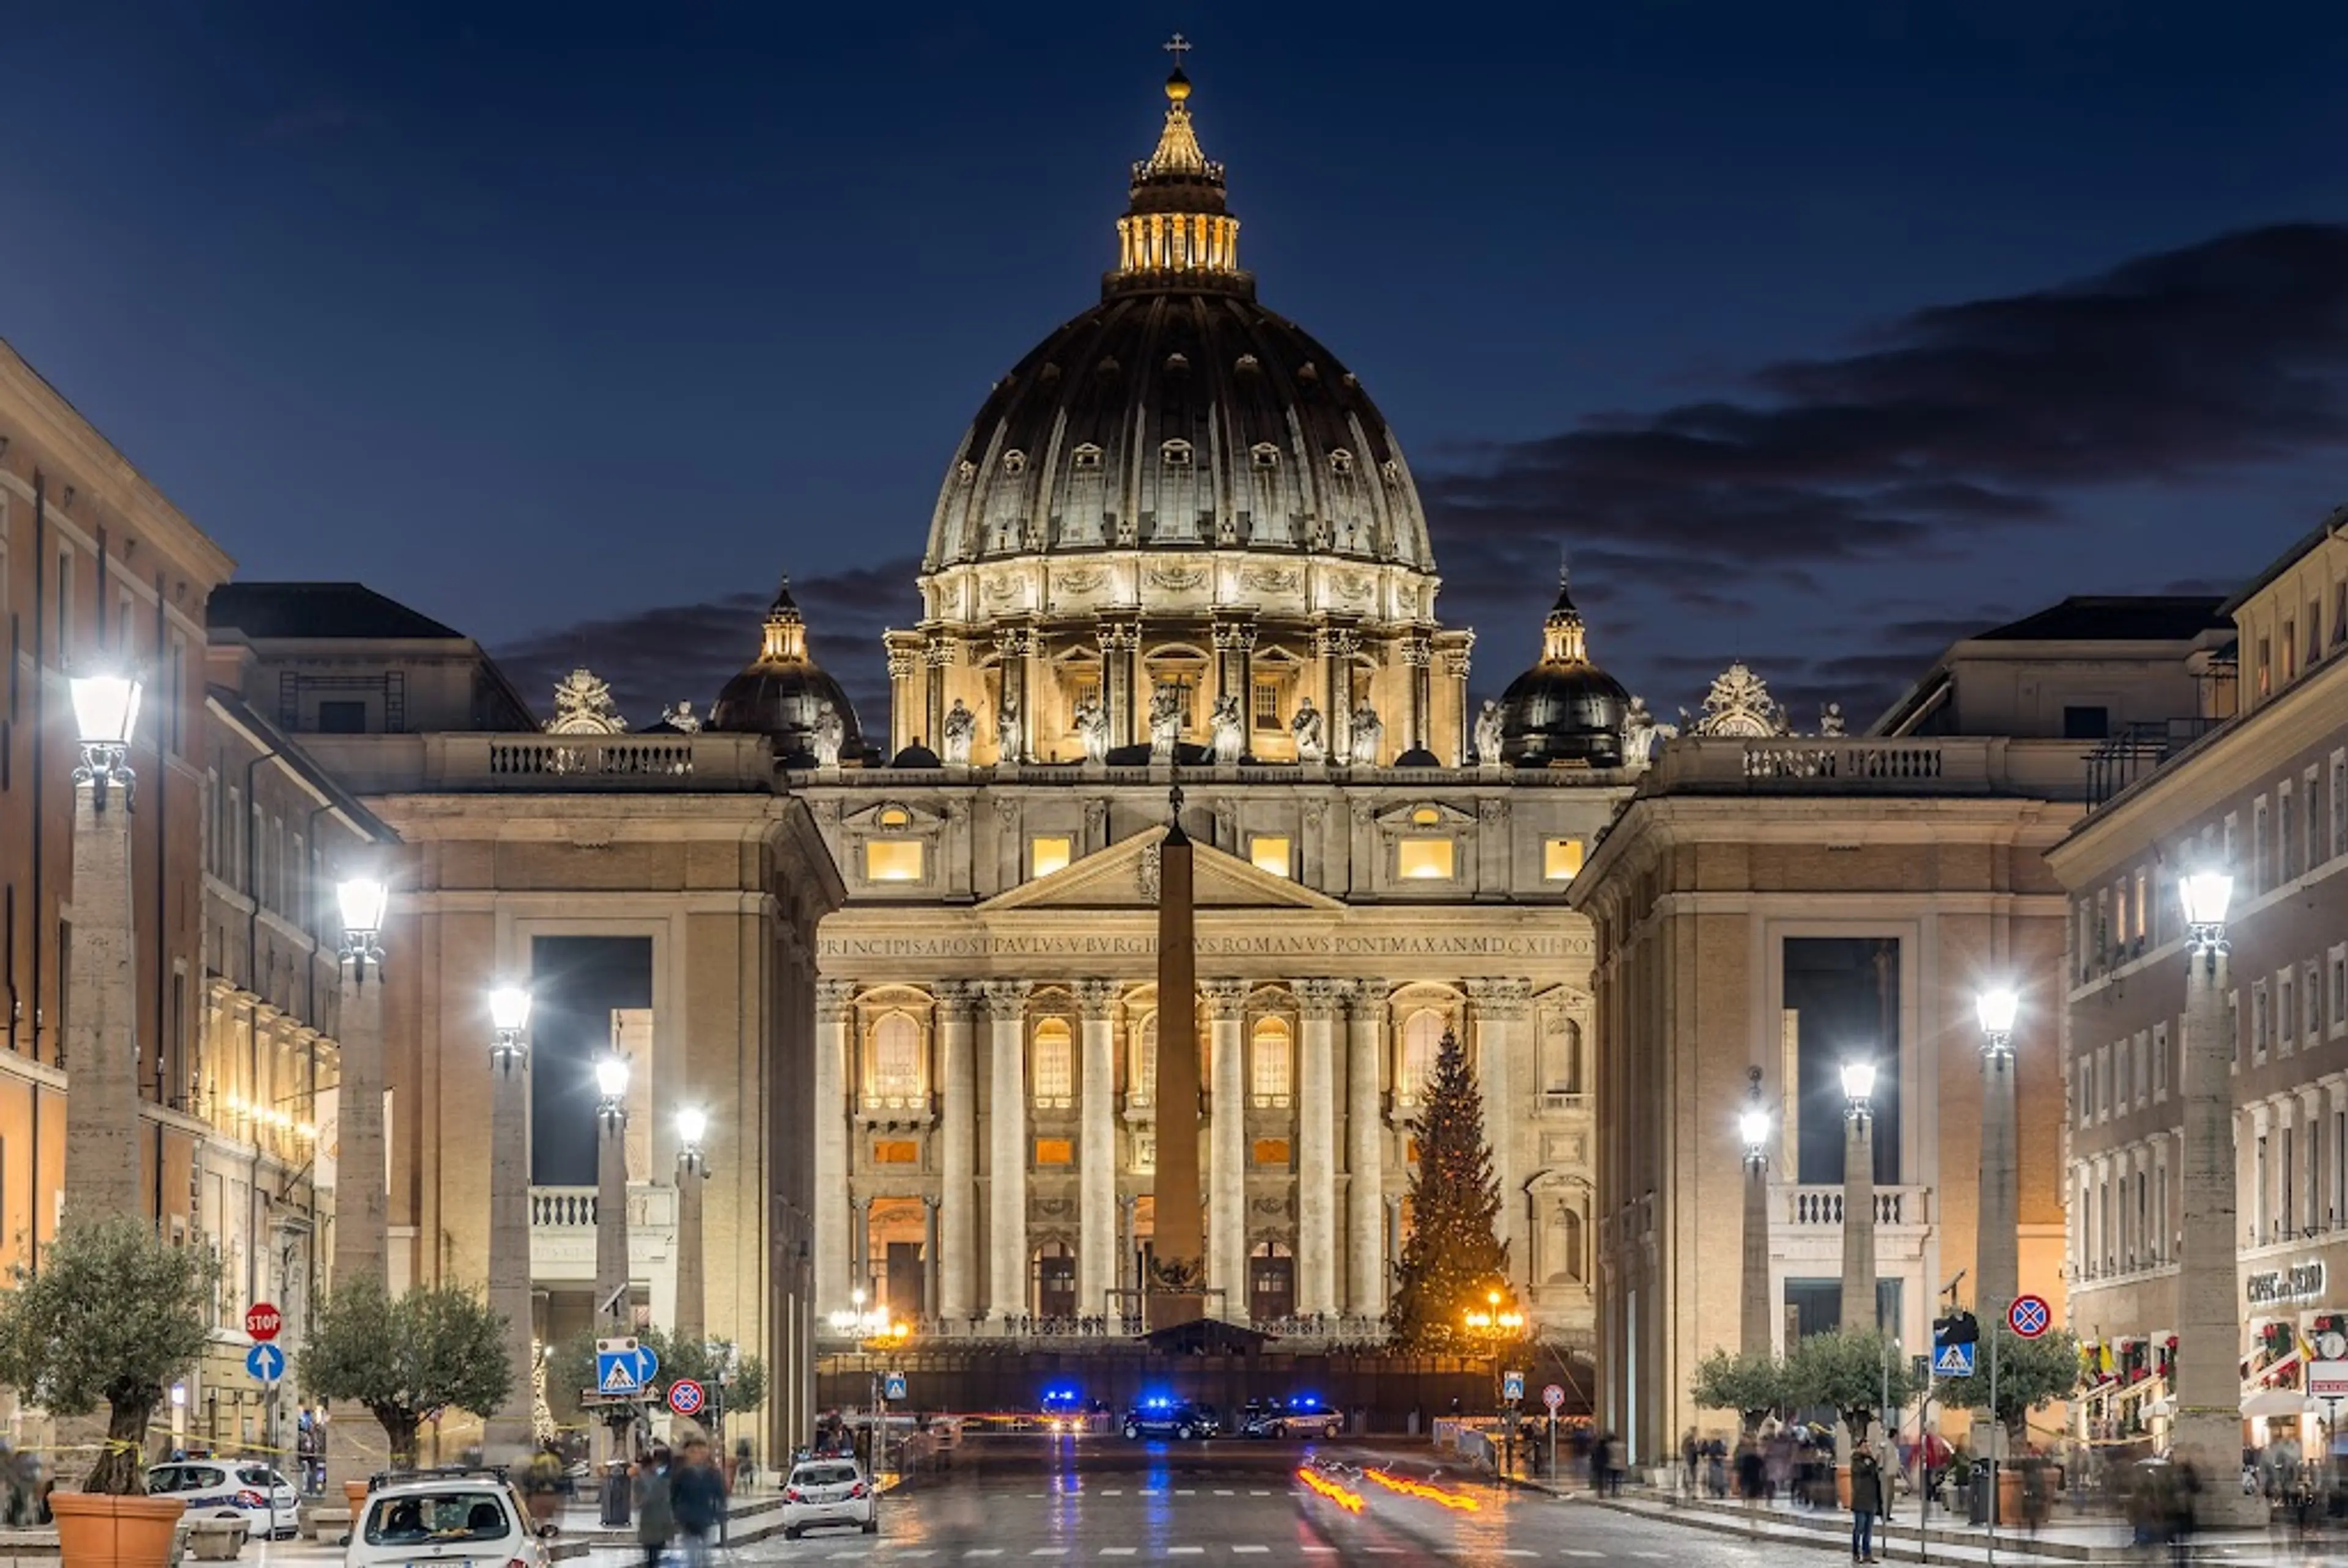 Christmas Eve Mass at St. Peter's Basilica